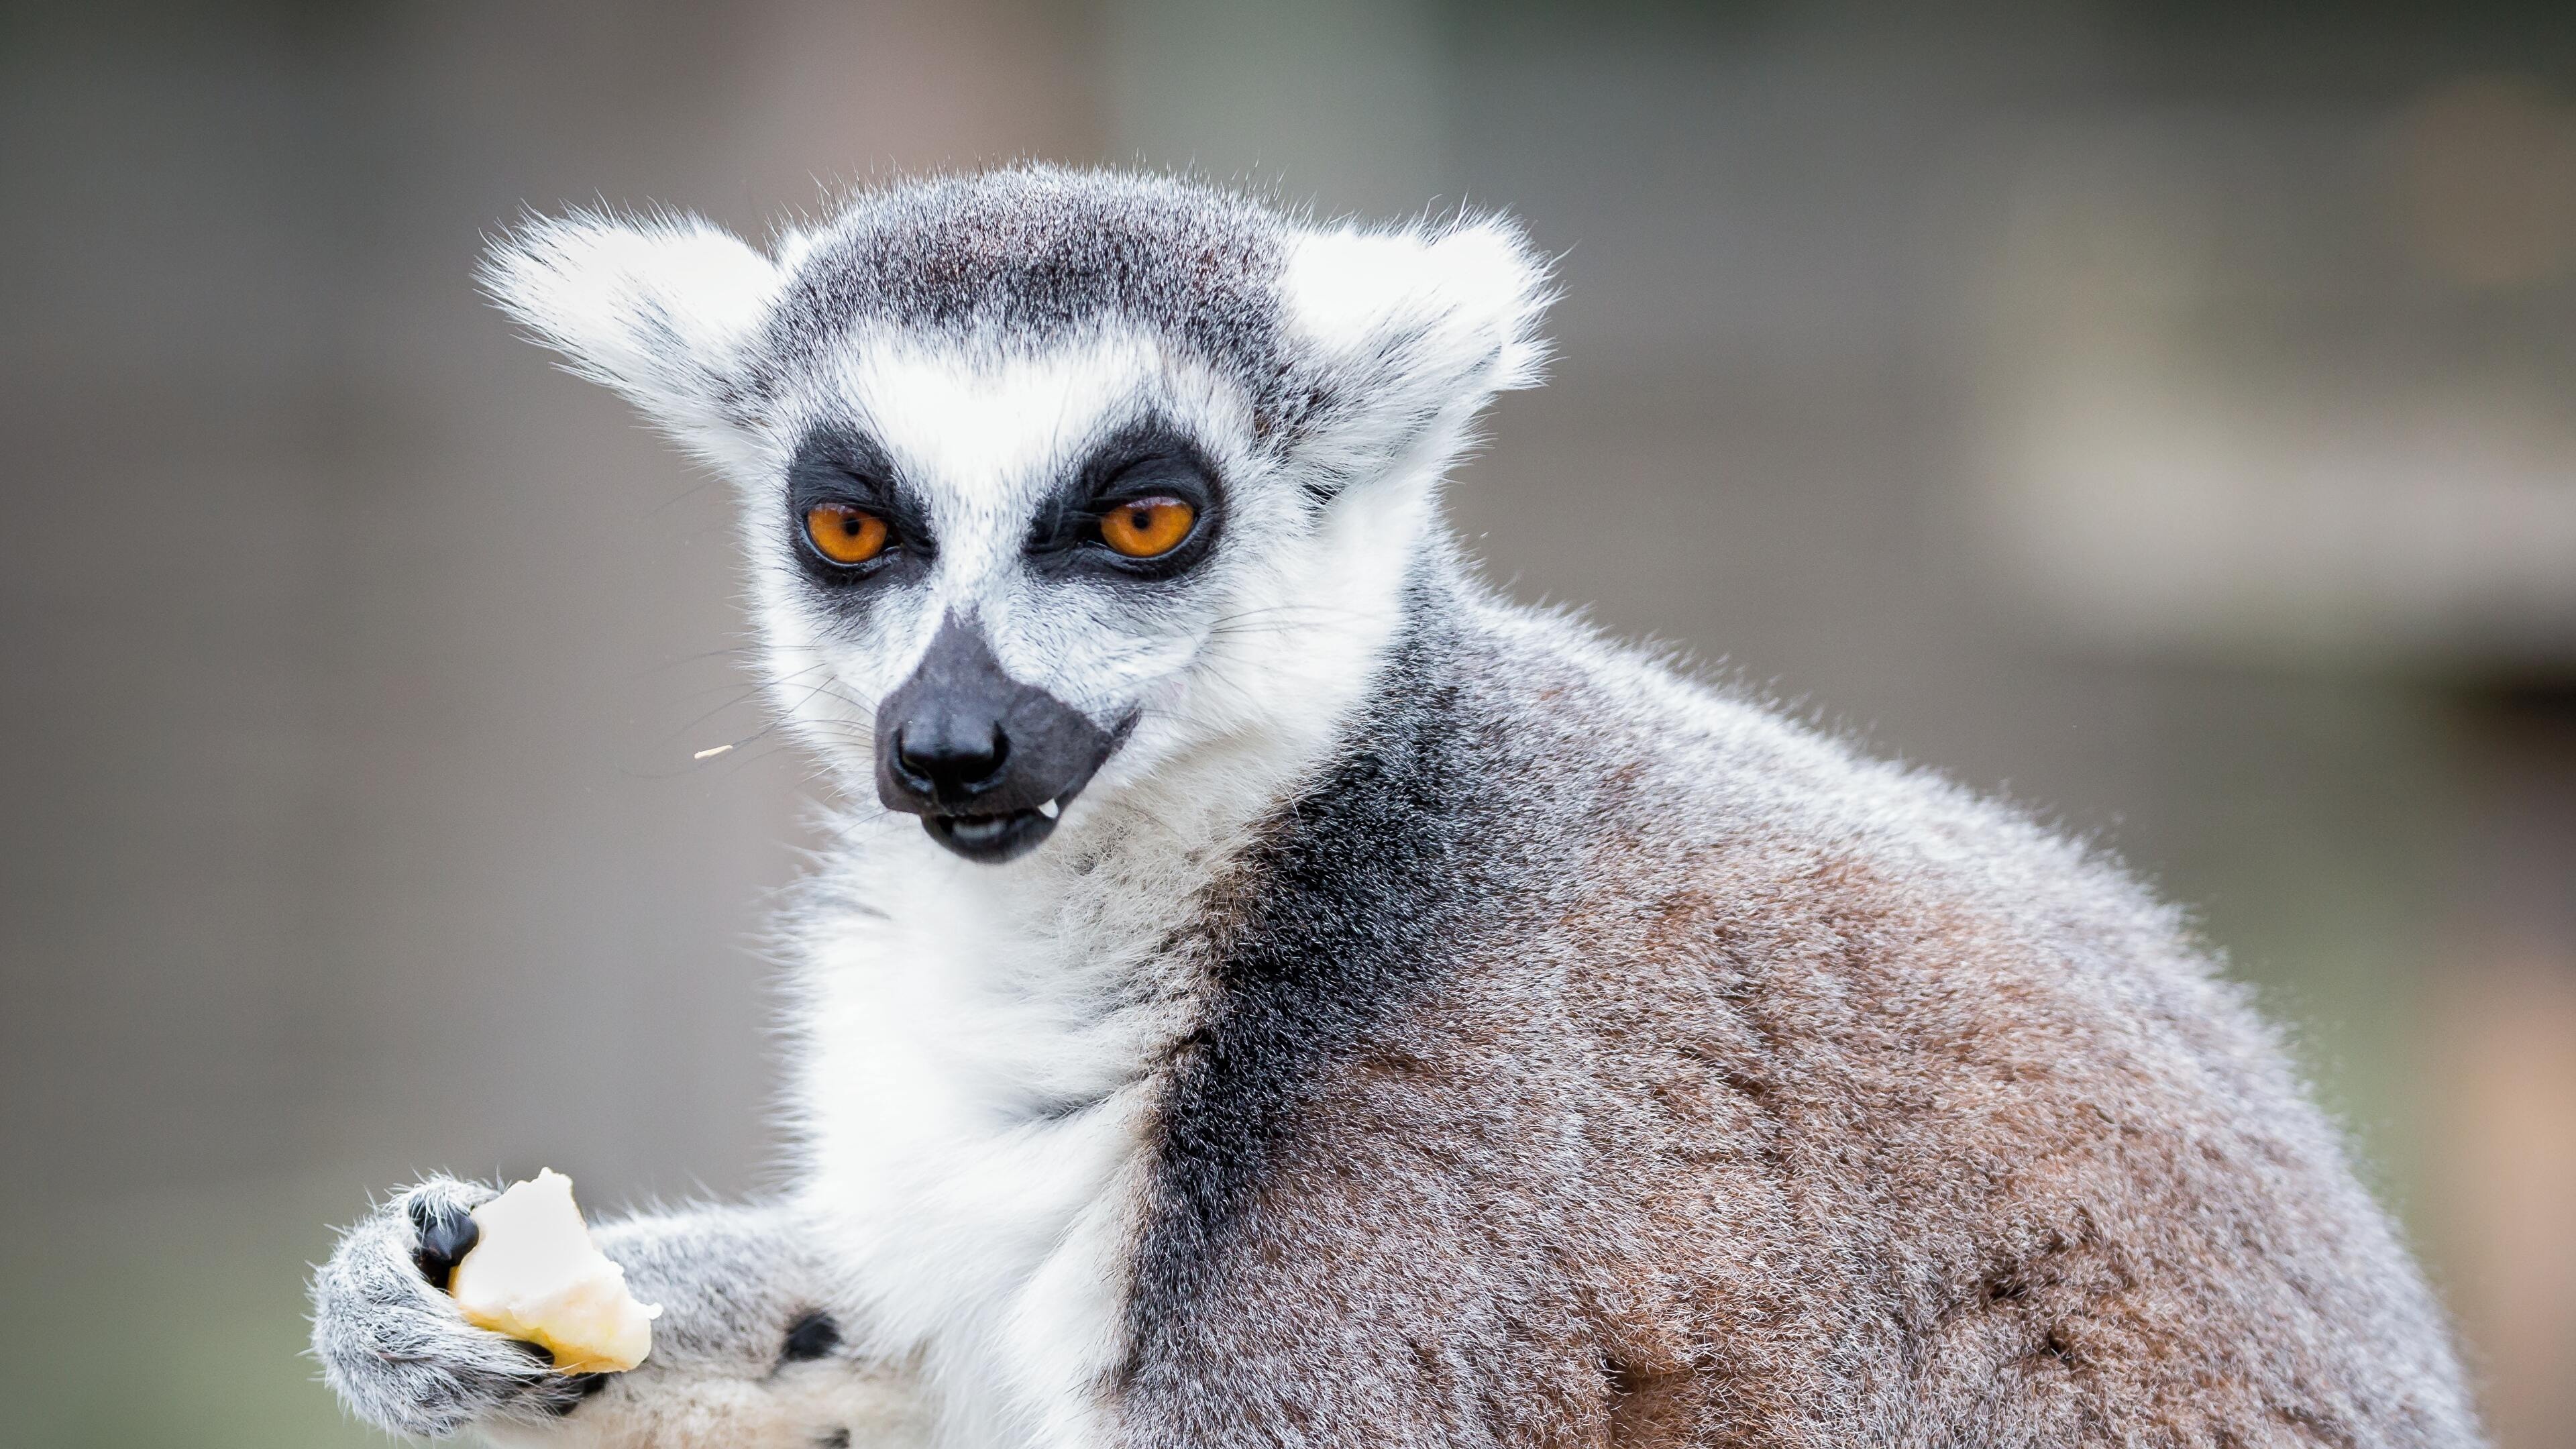 Lemur dining, Mealtime in 4K, Nature's buffet, Wildlife feast, 3840x2160 4K Desktop